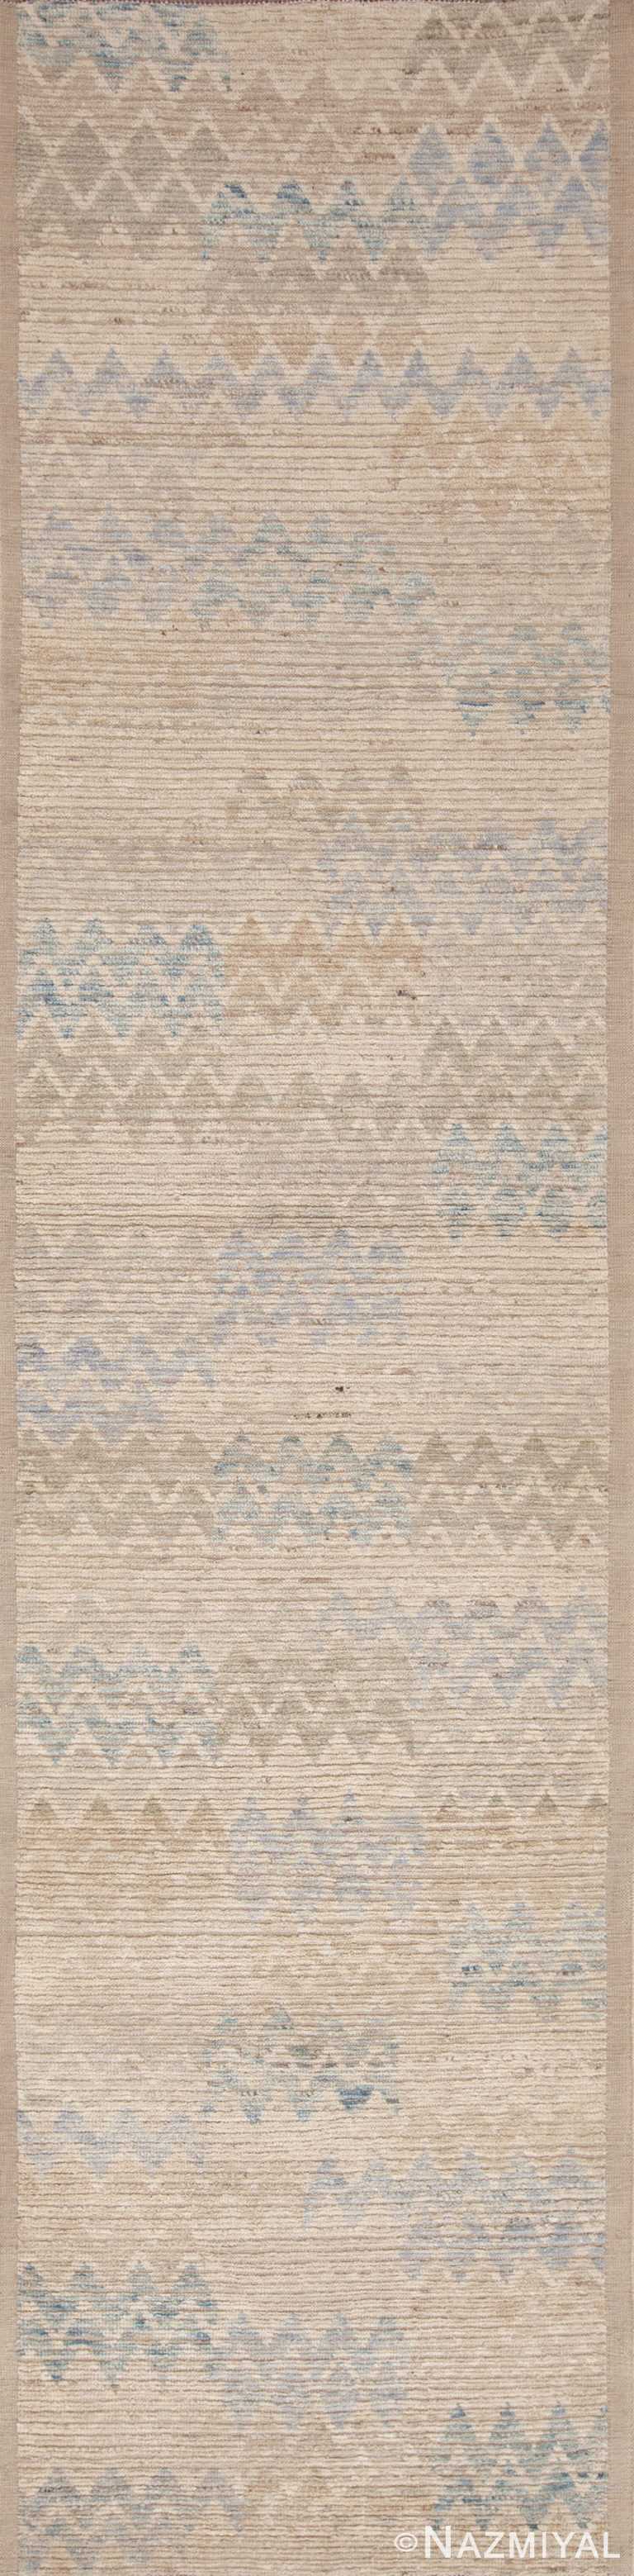 Light Cream Neutral Color Tribal Geometric Chevron Design Hallway Runner Rug 11065 by Nazmiyal Antique Rugs